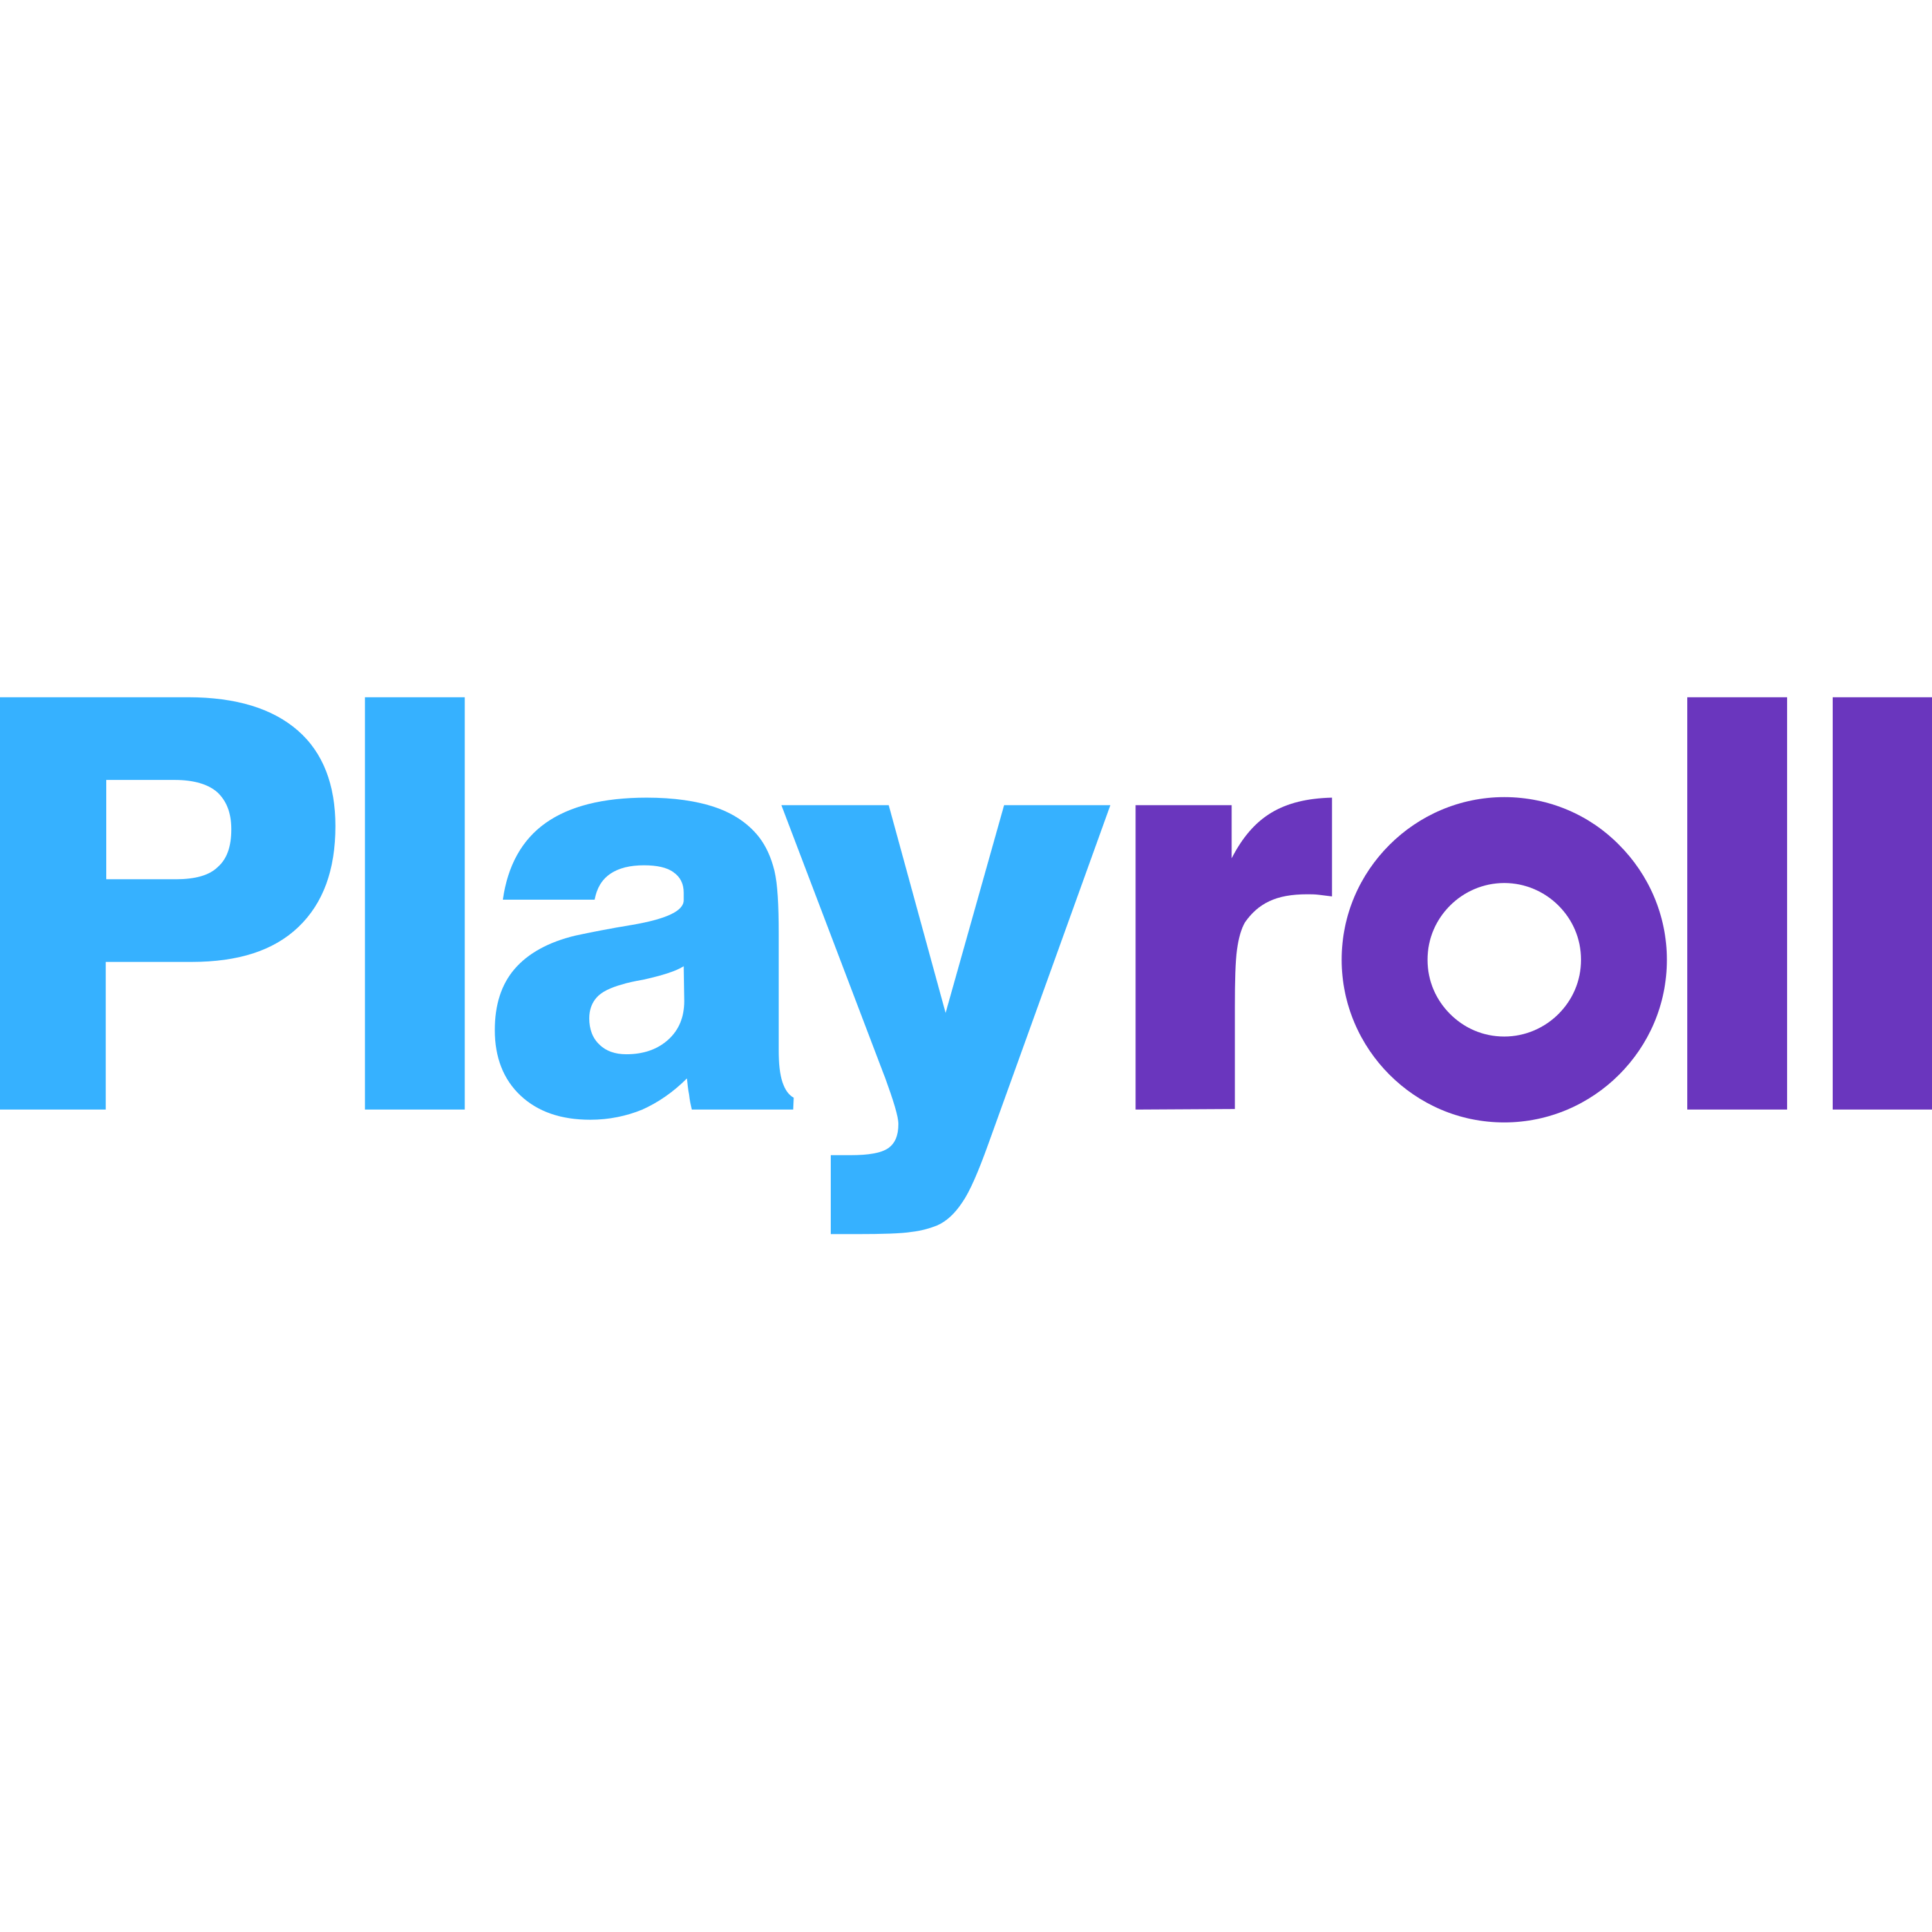 Playroll Logo  Transparent Image